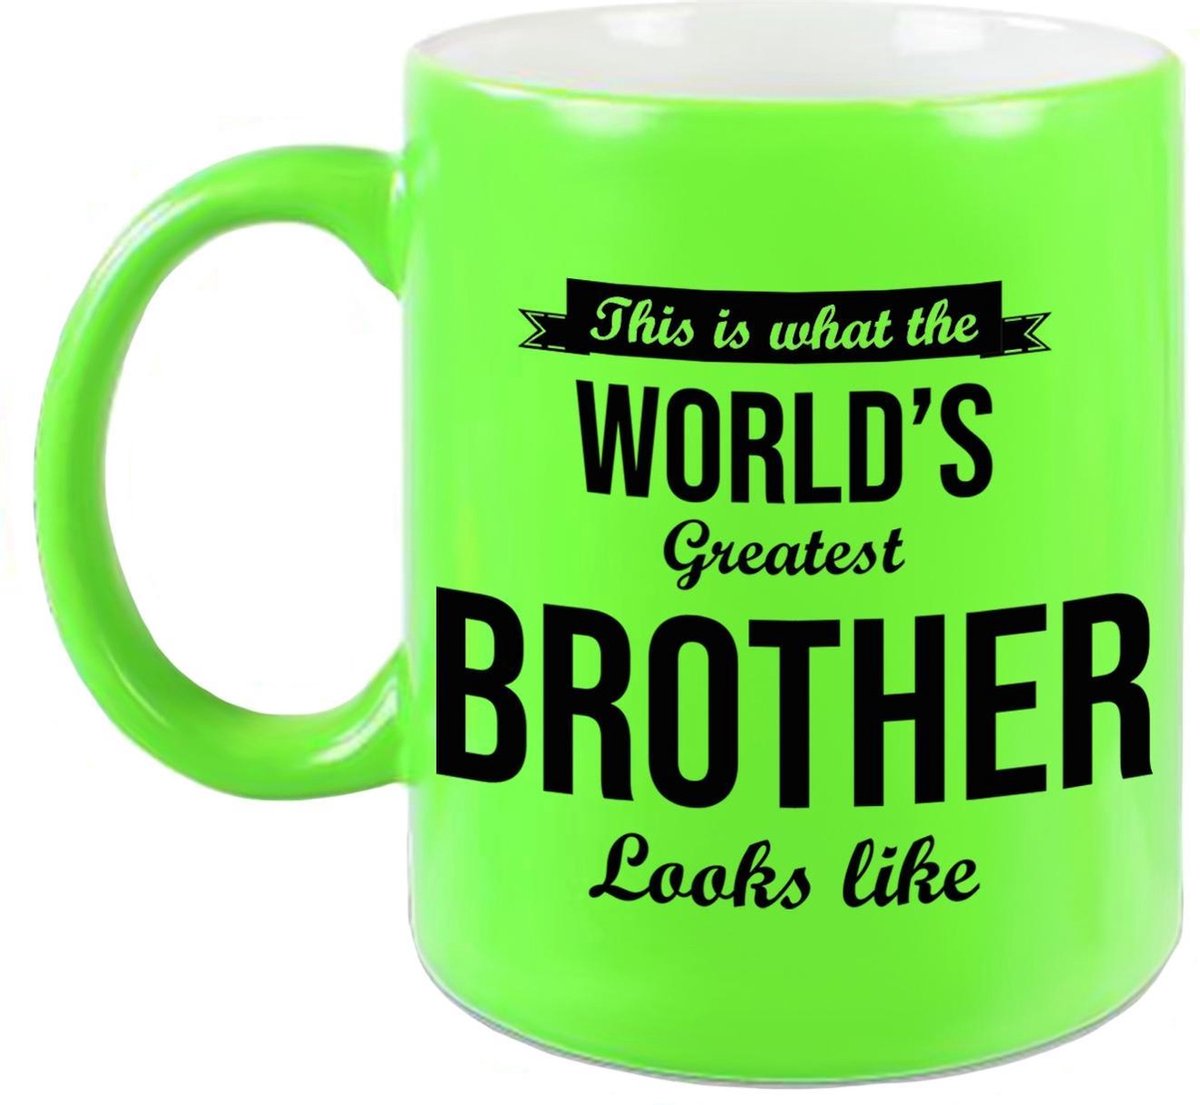 Worlds Greatest Brother cadeau koffiemok / theebeker neon groen 330 ml